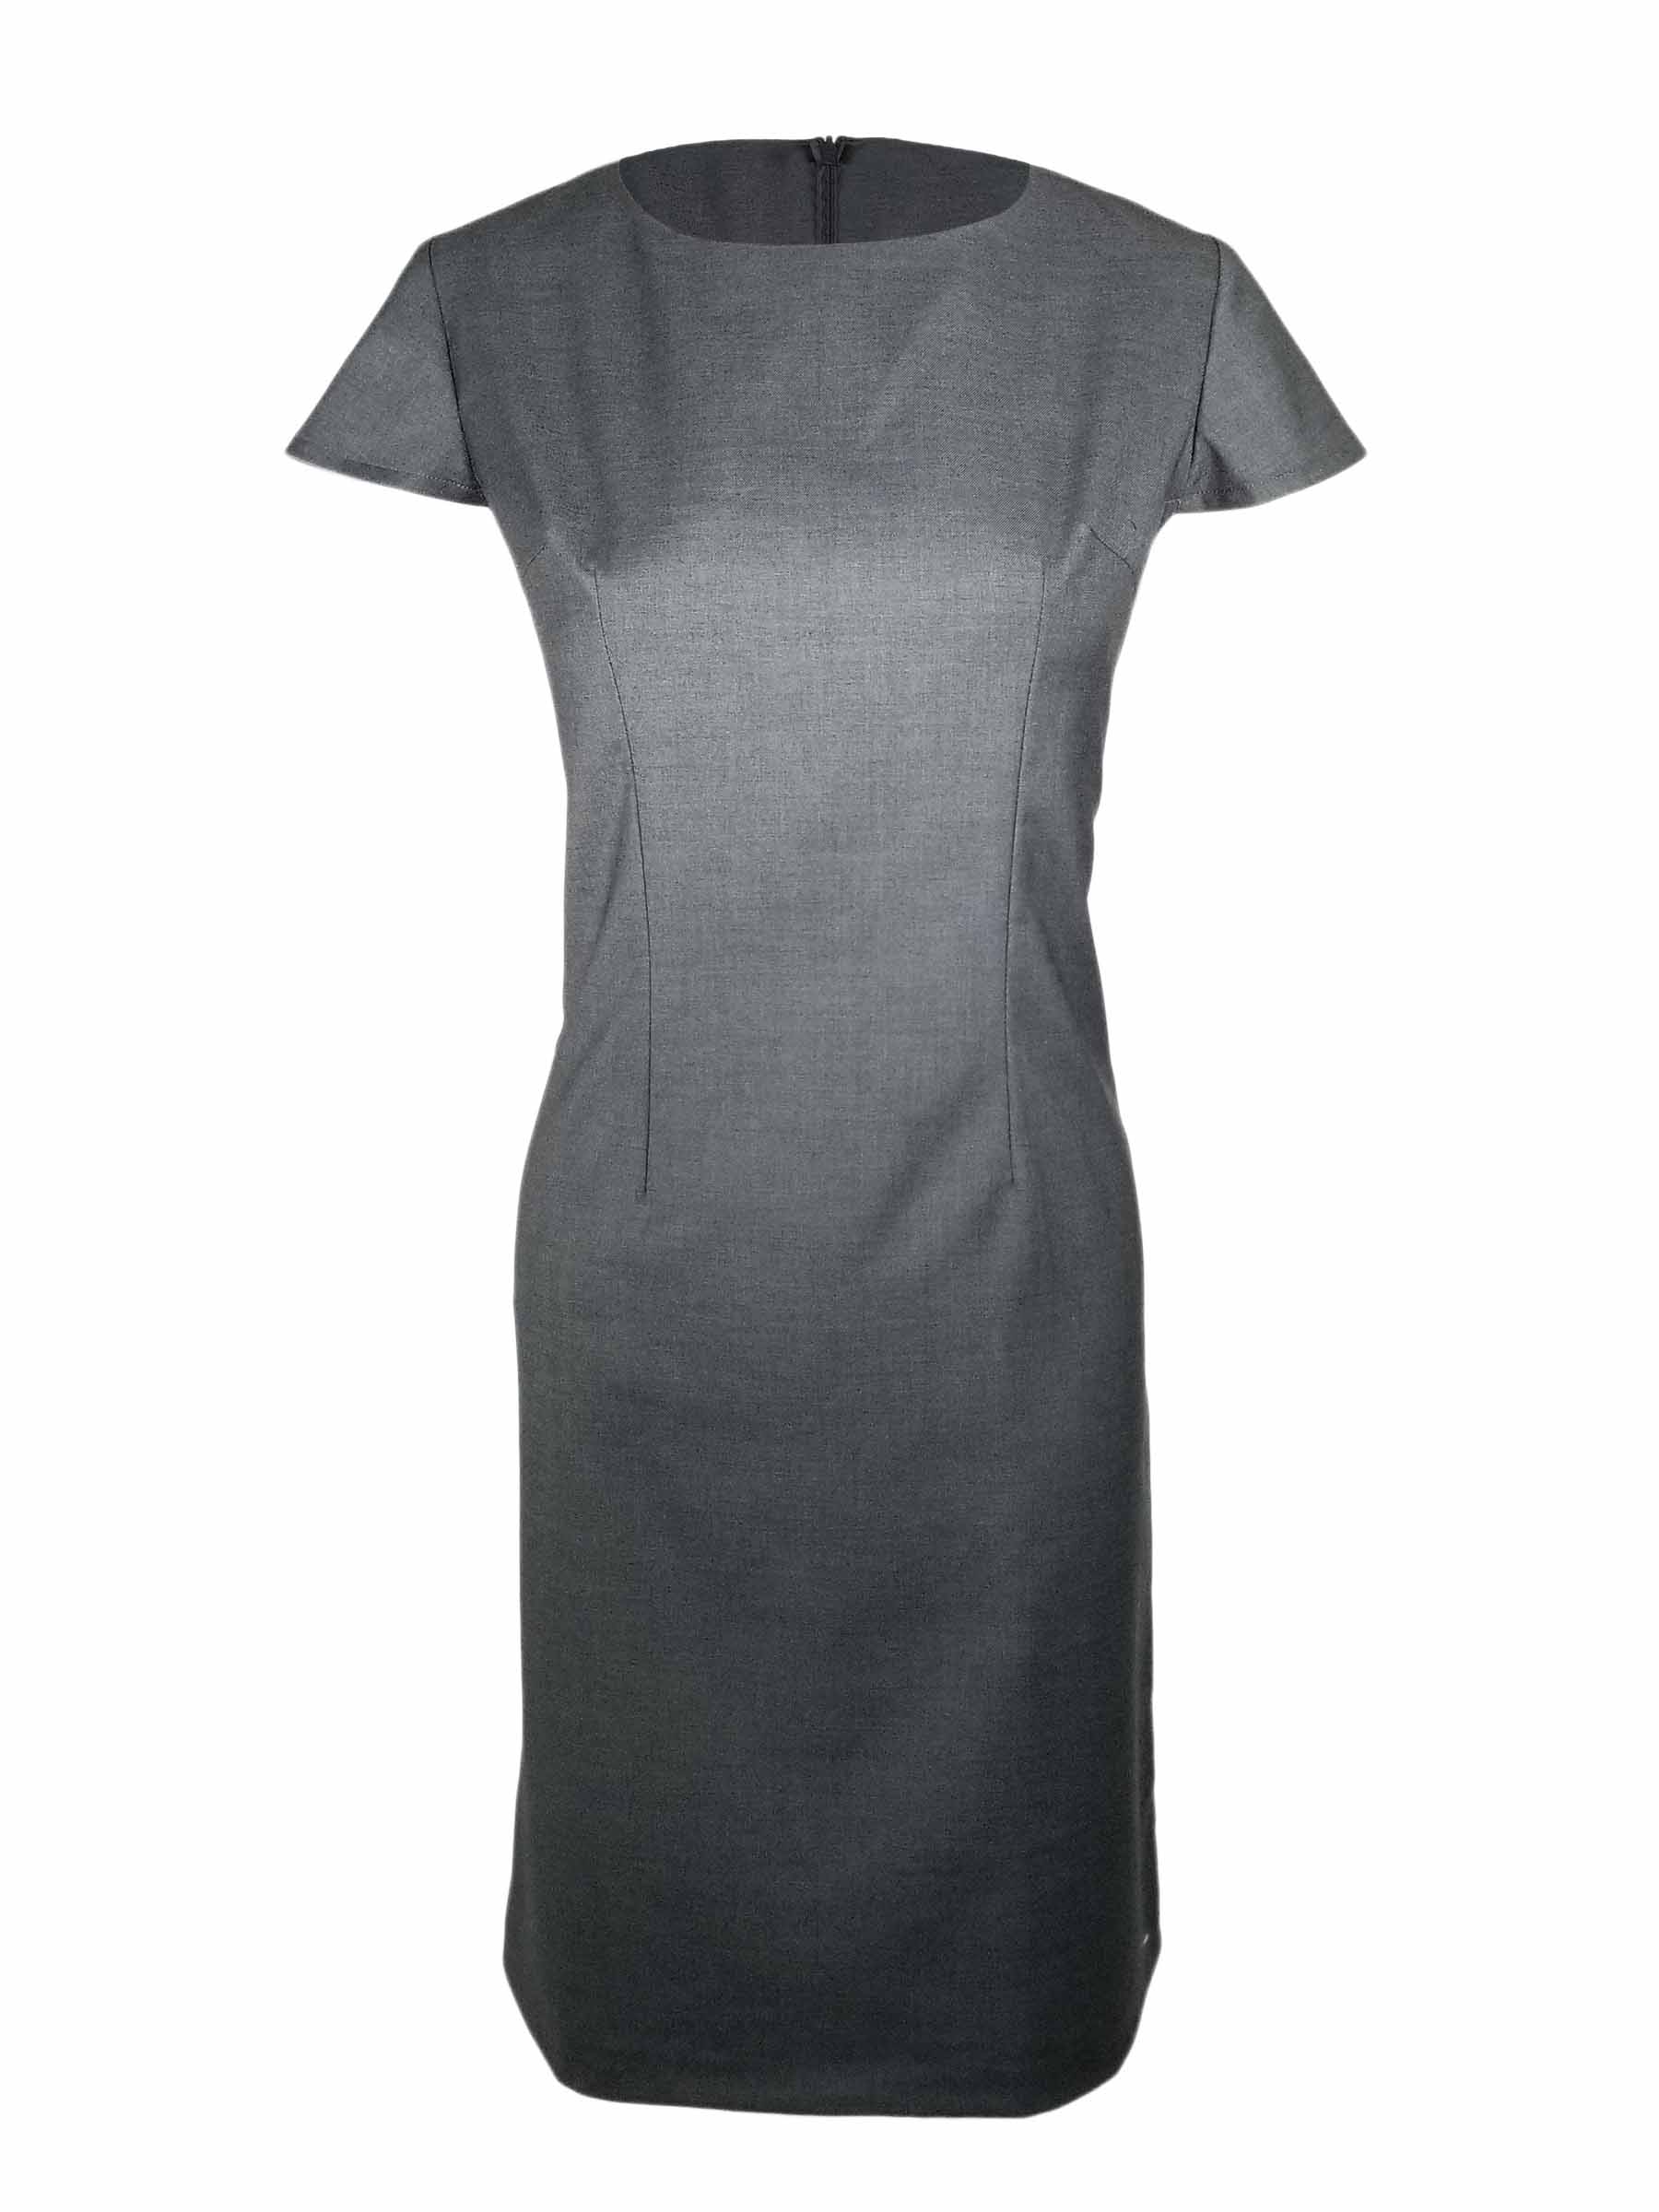 Audrey Slimline Dress - Light Grey - Uniform Edit